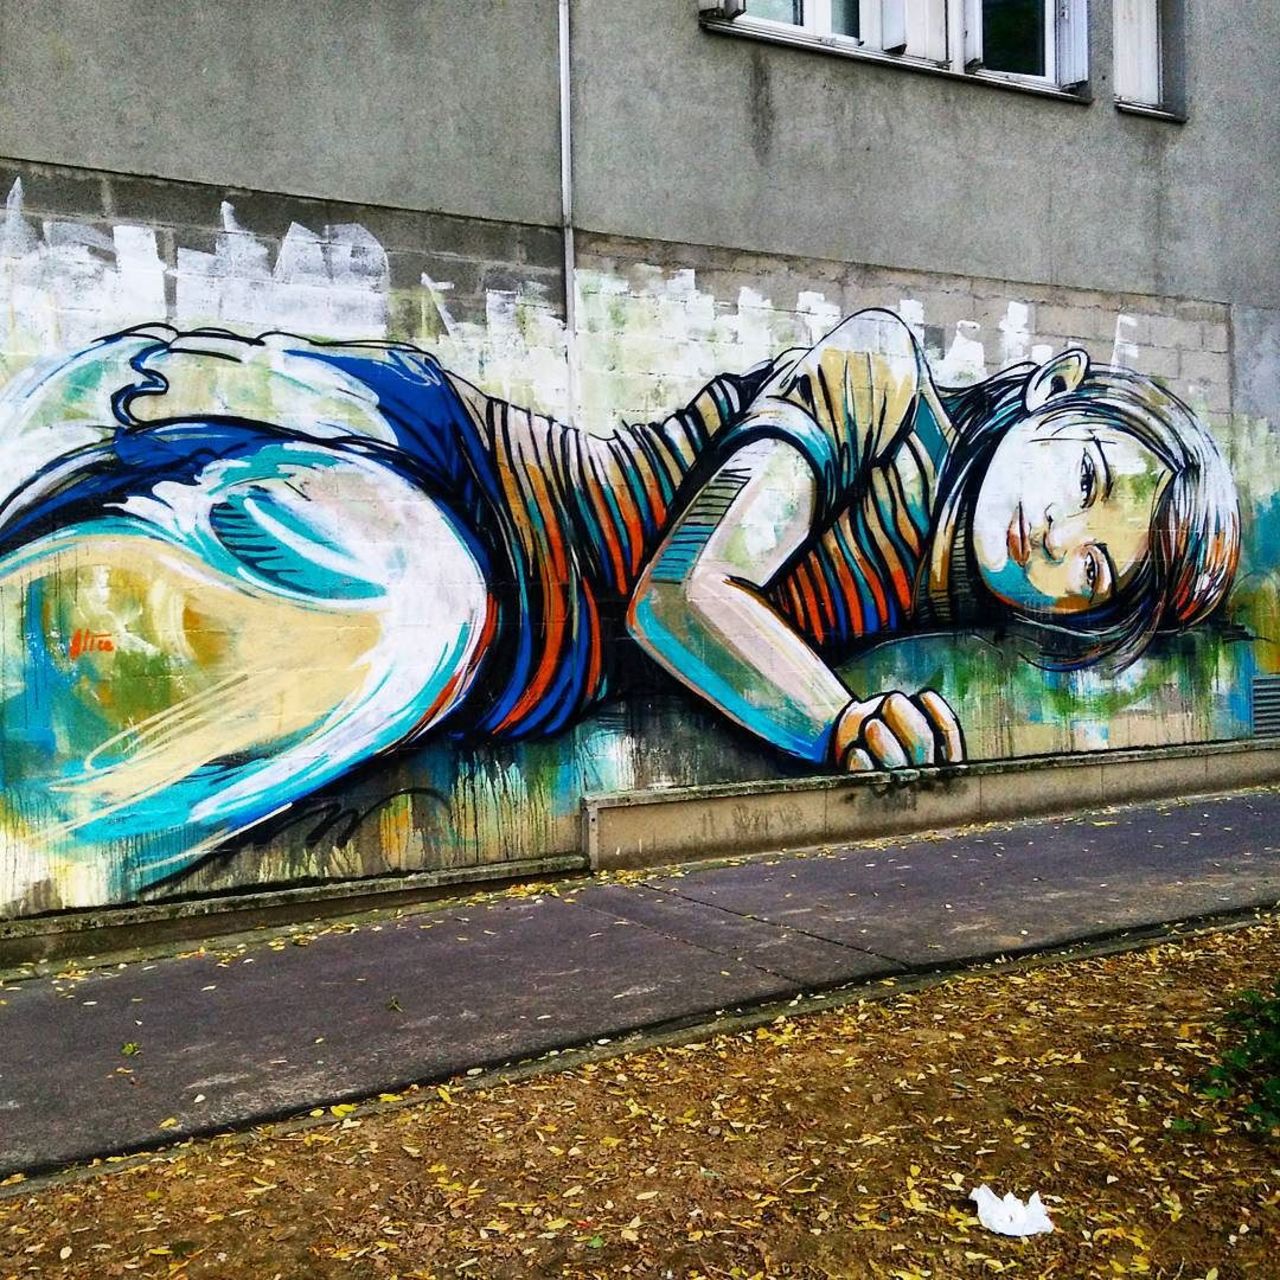 #Paris #graffiti photo by @ceky_art http://ift.tt/1GB8l5H #StreetArt https://t.co/0CYYx8dSOx